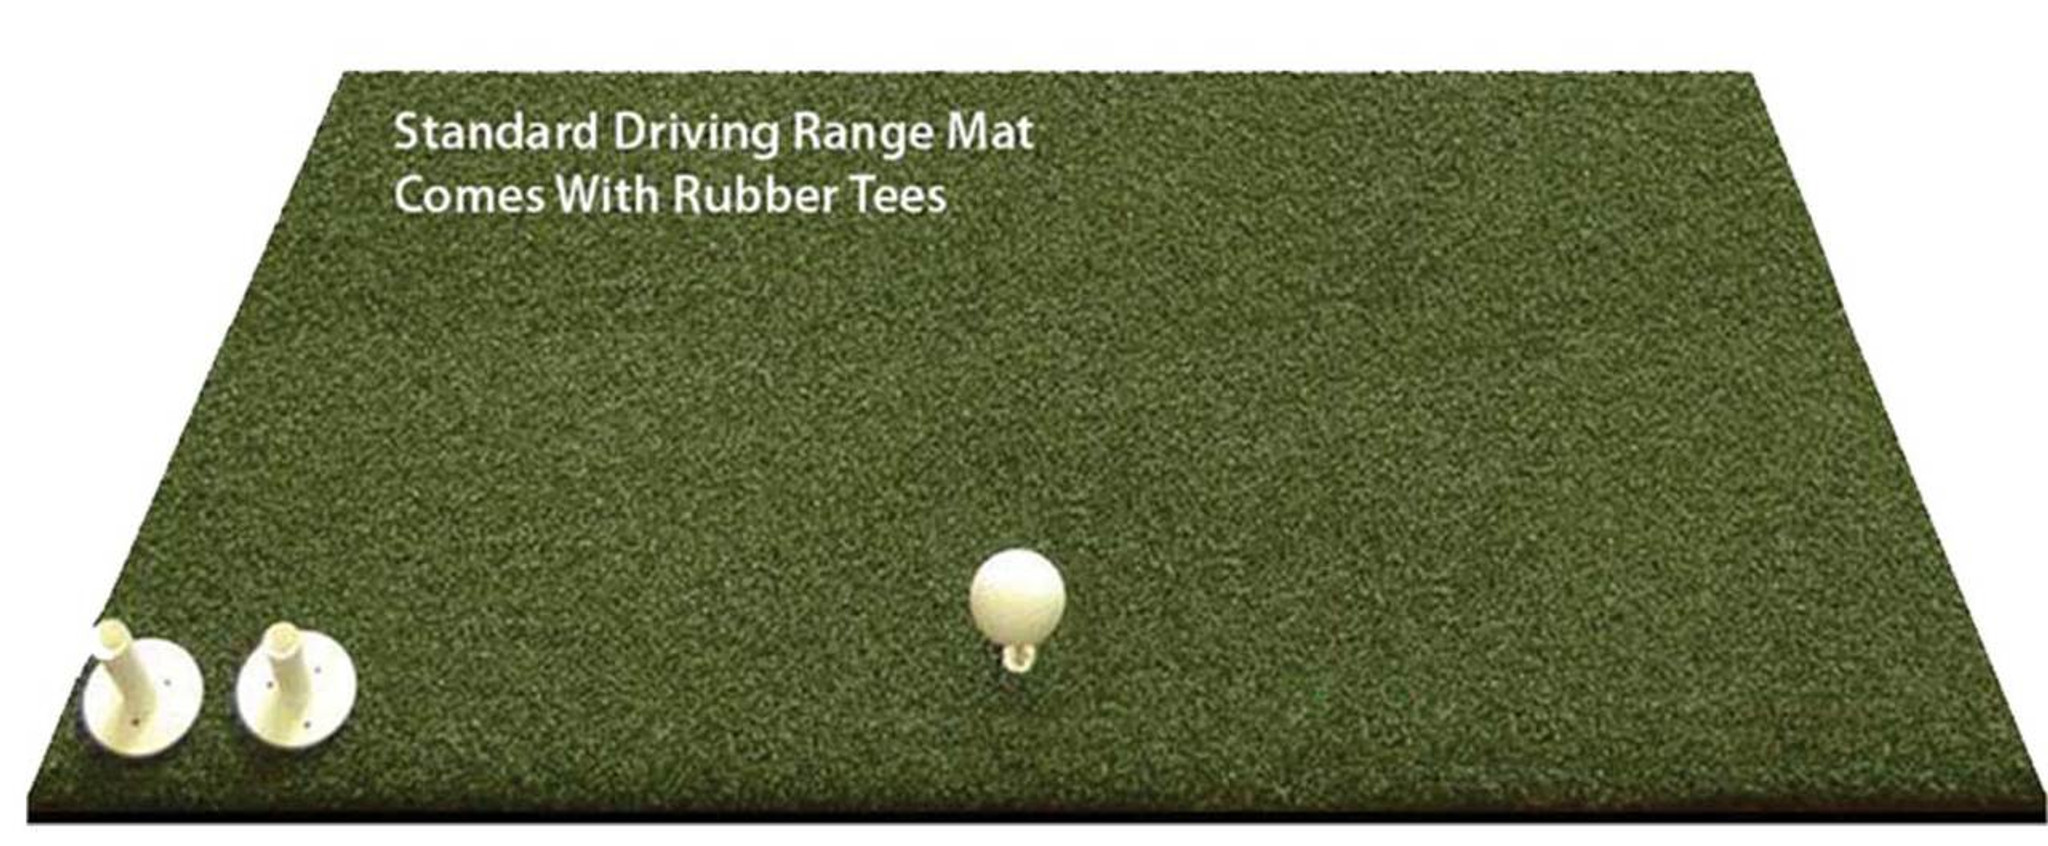 5Star Commercial Driving Range Golf Mat - GORILLA